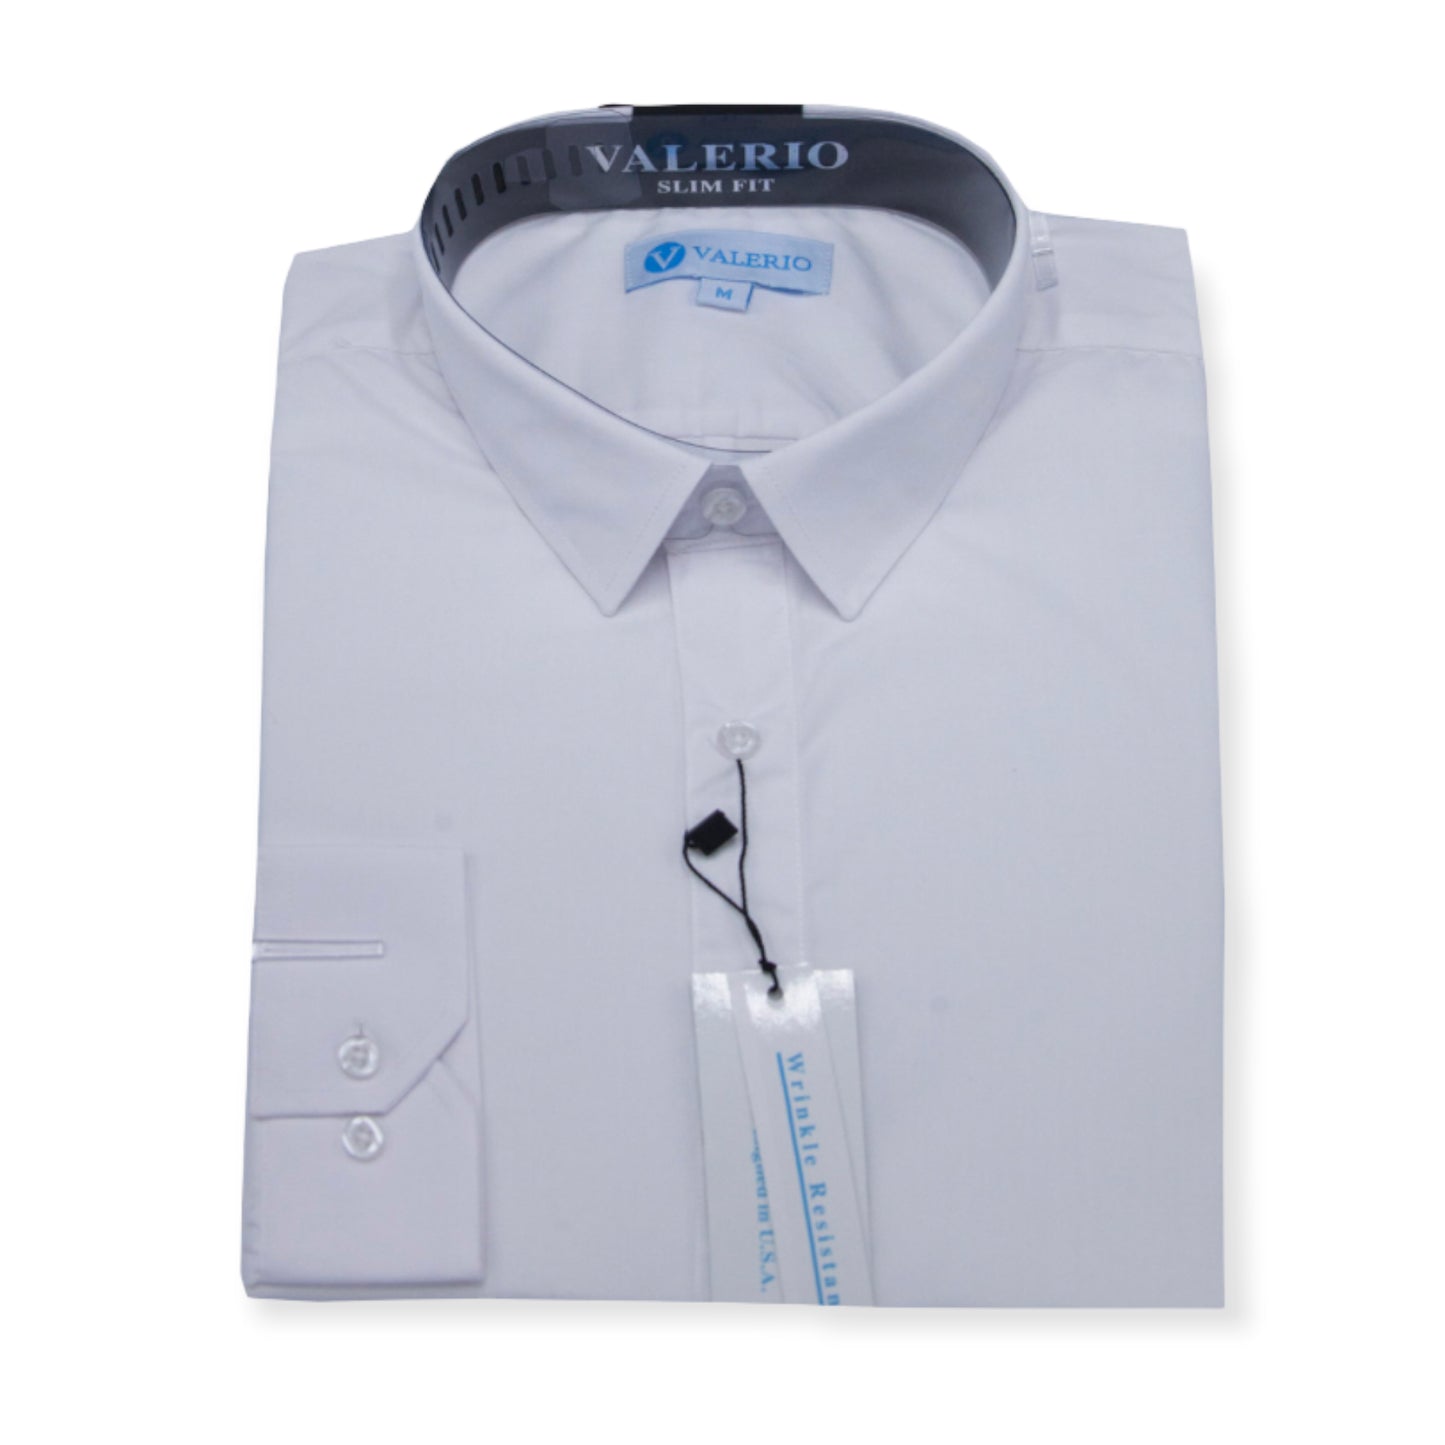 Valerio Slim White Dress Shirt (NEW)